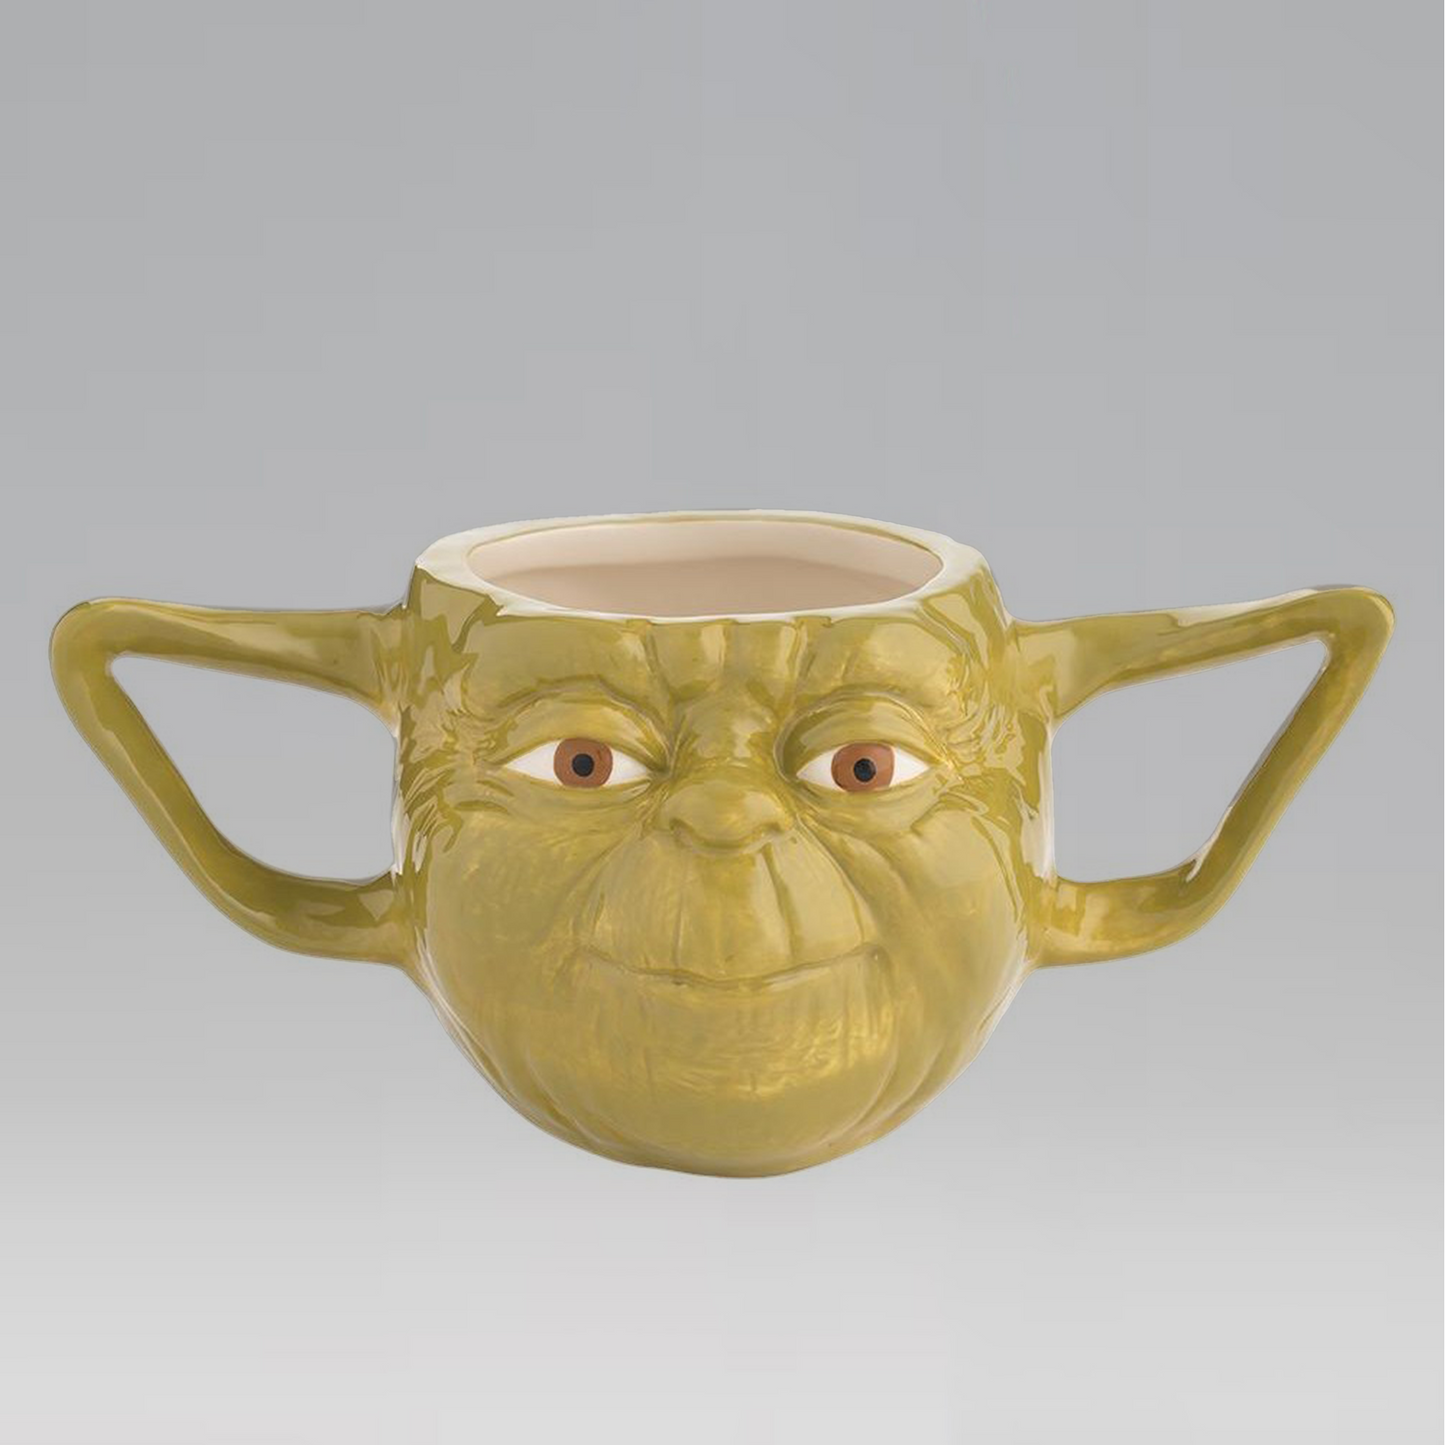 Yoda Star Wars Ceramic Sculpted 16 oz. Mug